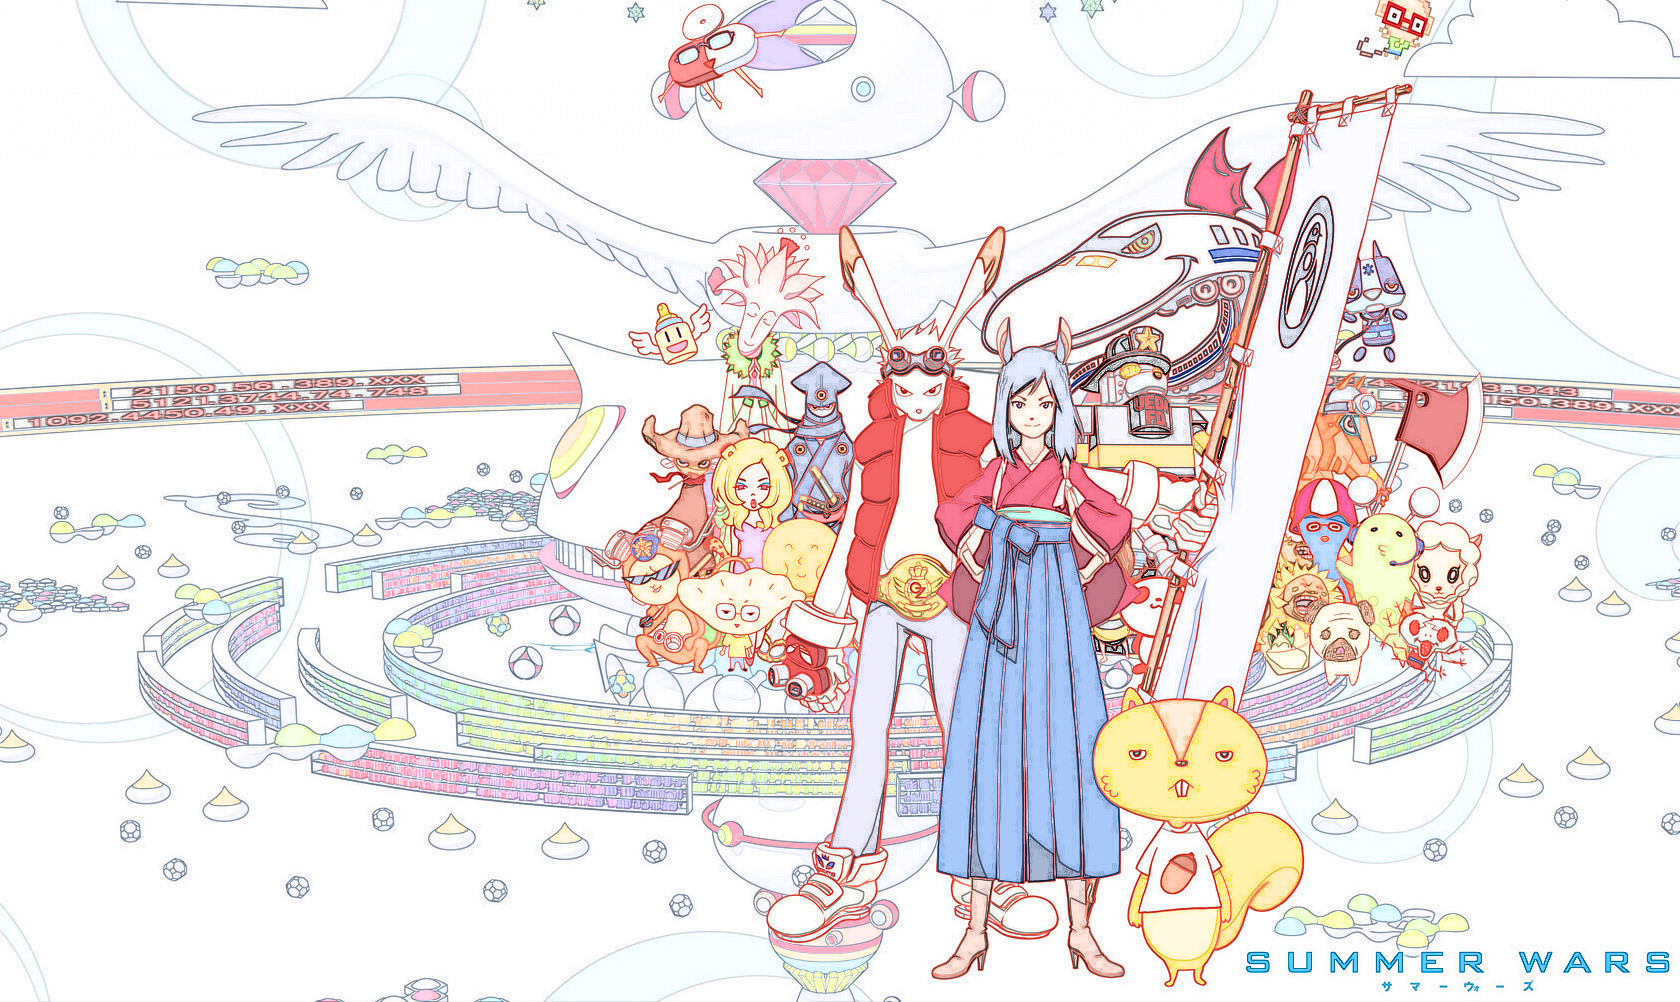 Summer Wars Sketch By Ichimokuren10